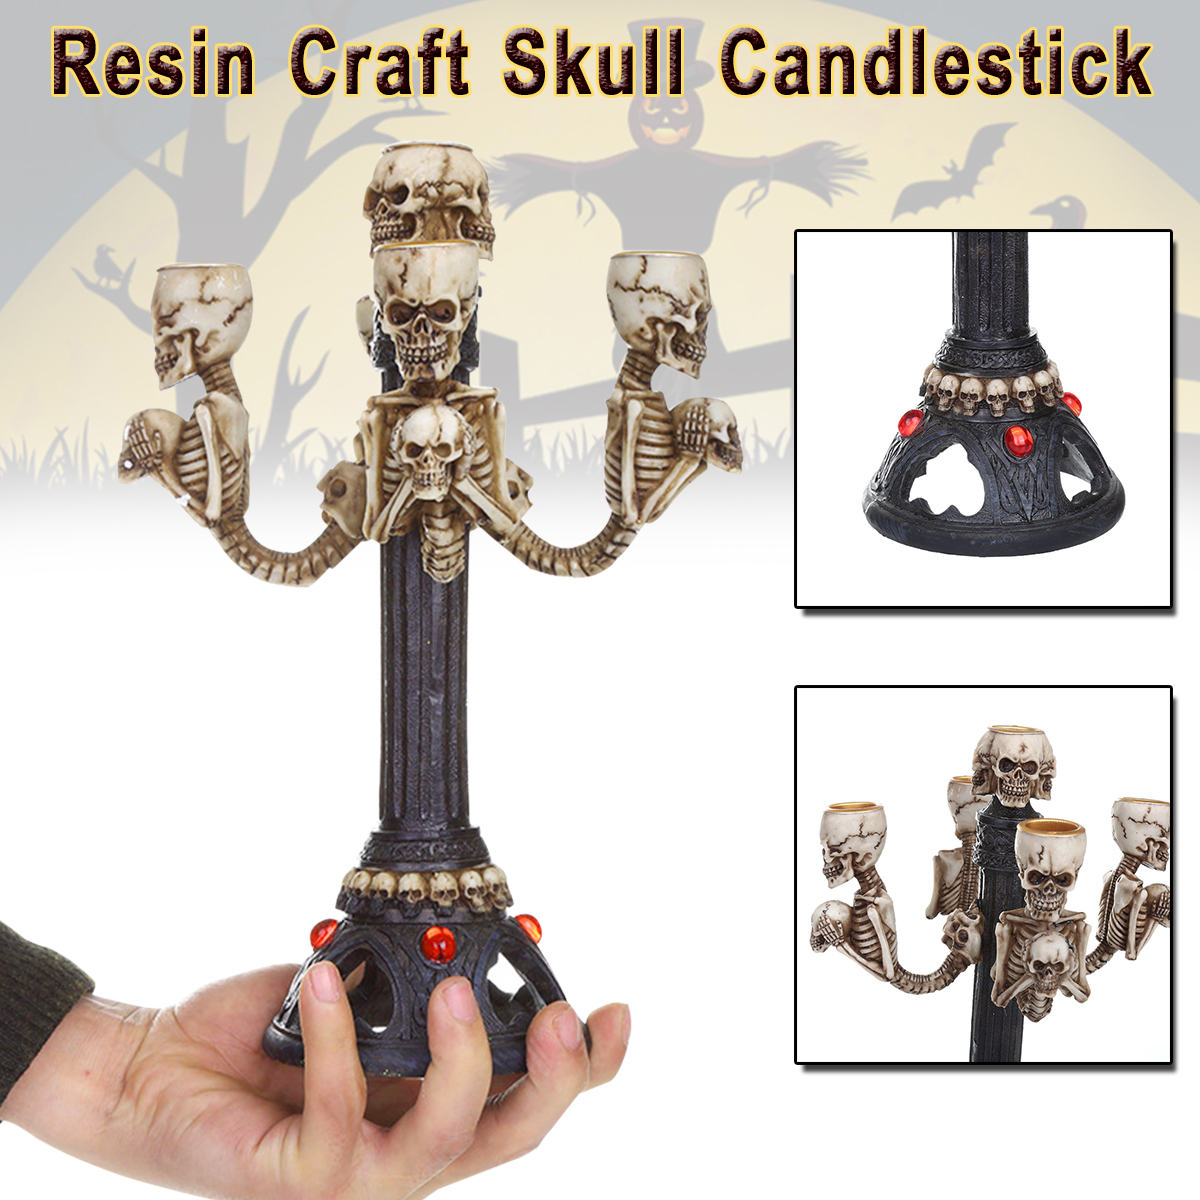 Resin-Craft-Statues-Skull-Candlestick-Creative-Figurines-Sculpture-Decorations-1348242-1